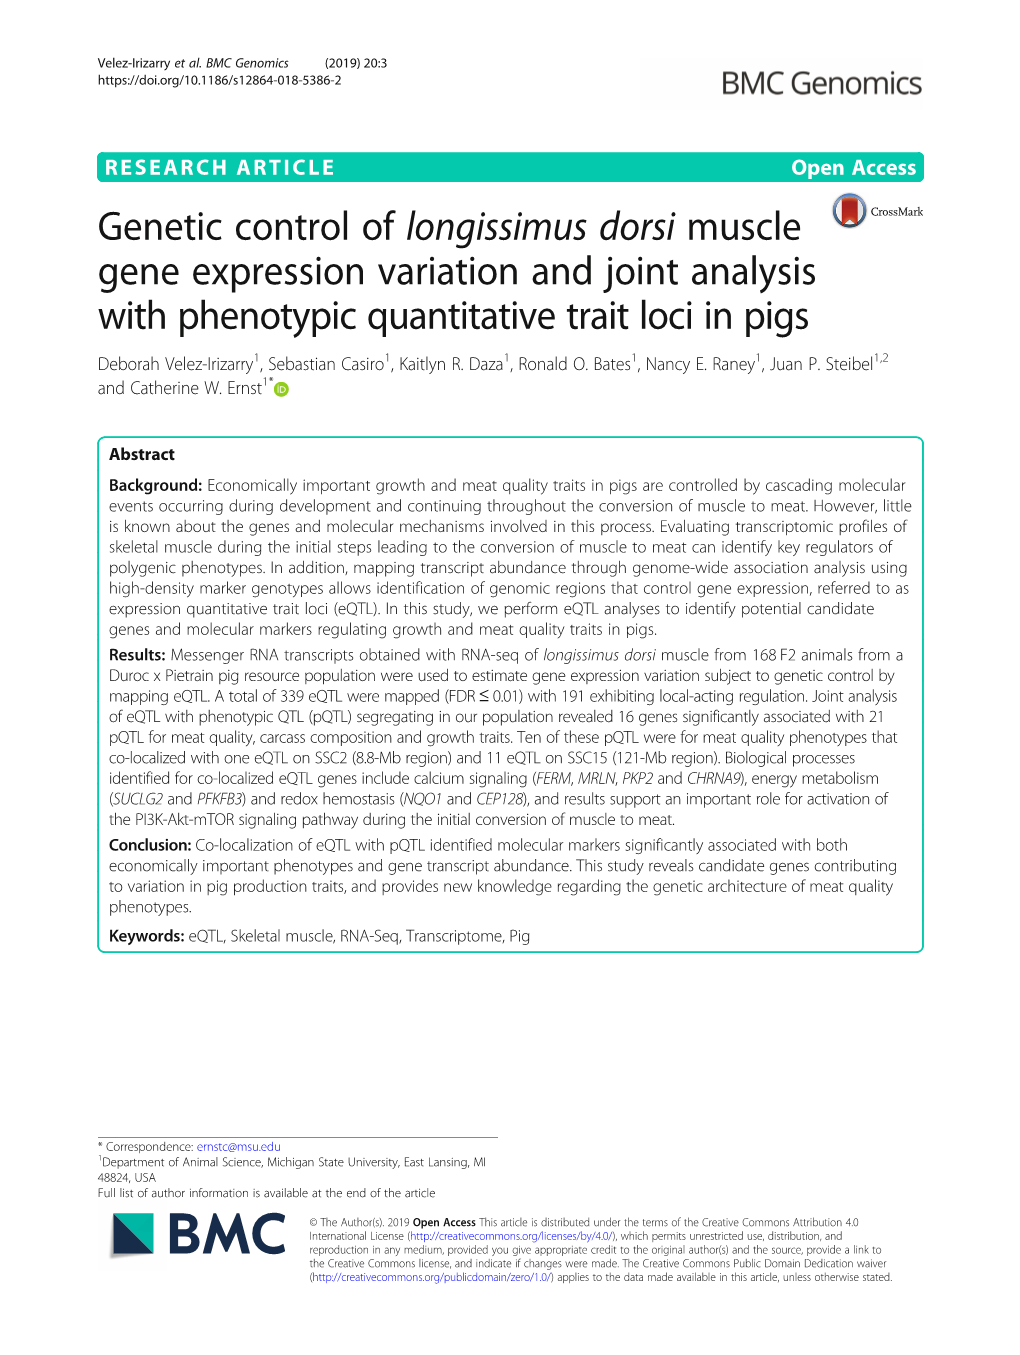 Genetic Control of Longissimus Dorsi Muscle Gene Expression Variation